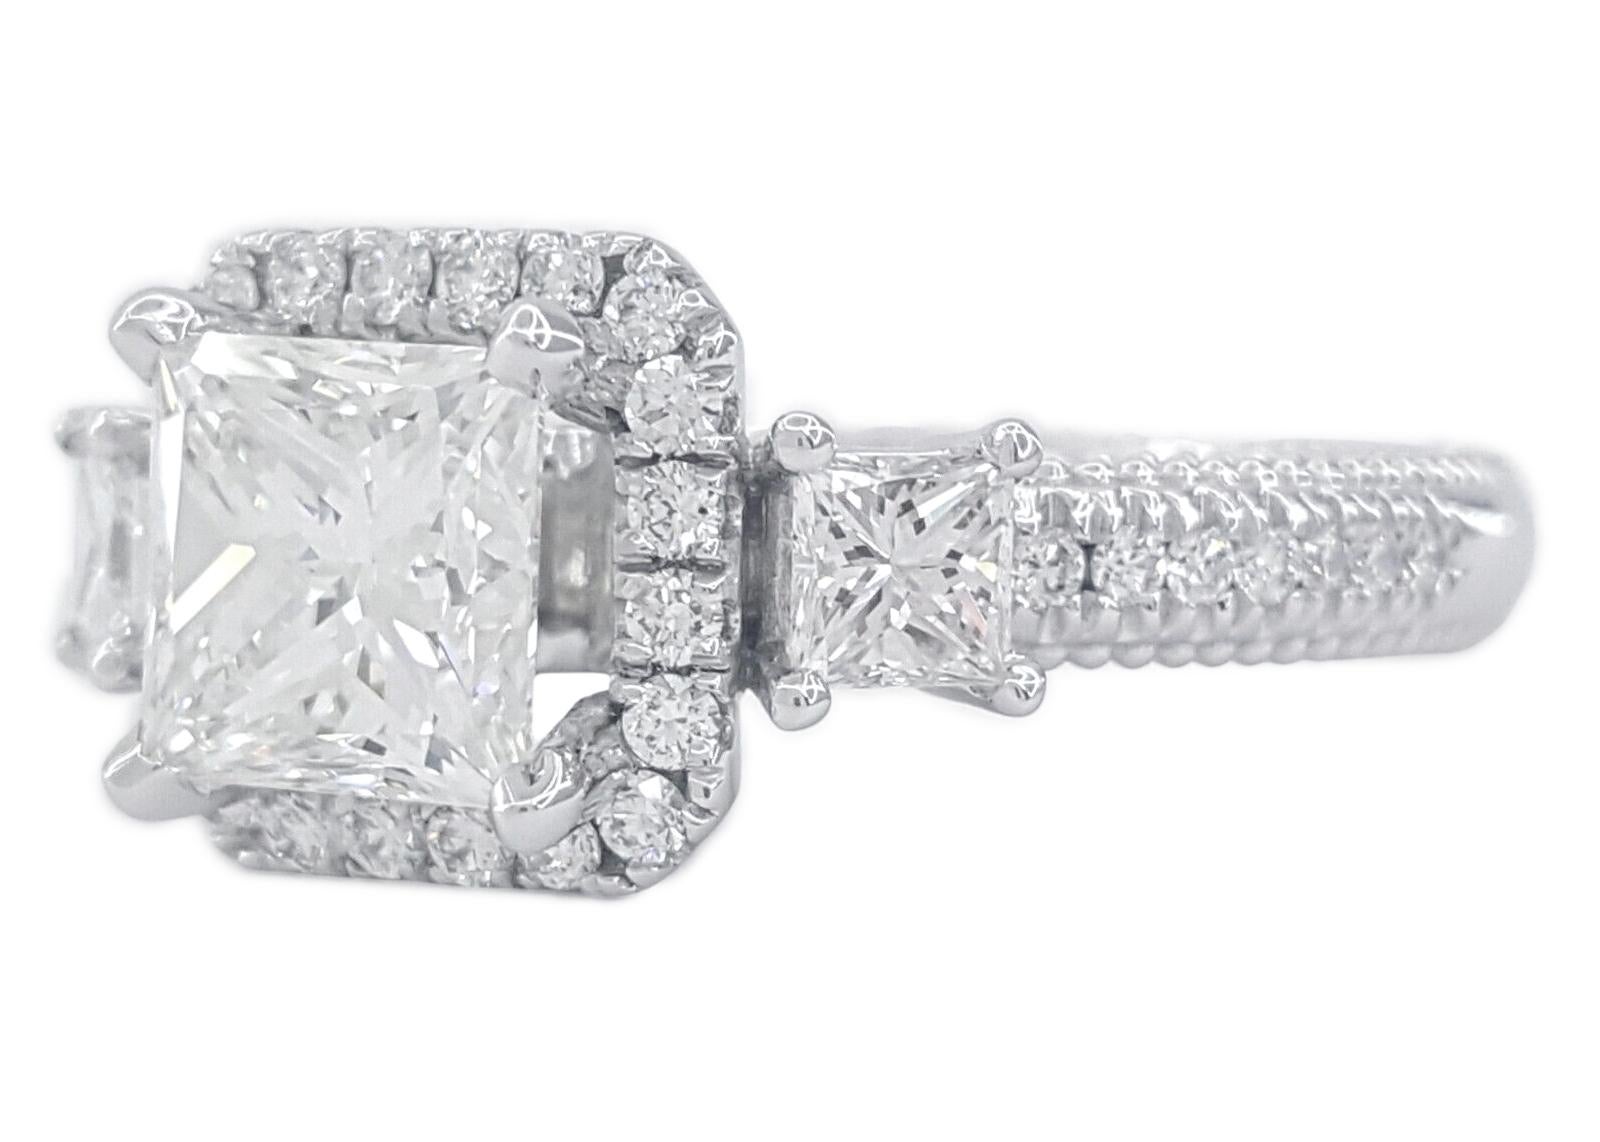 2.5 carat princess cut diamond ring